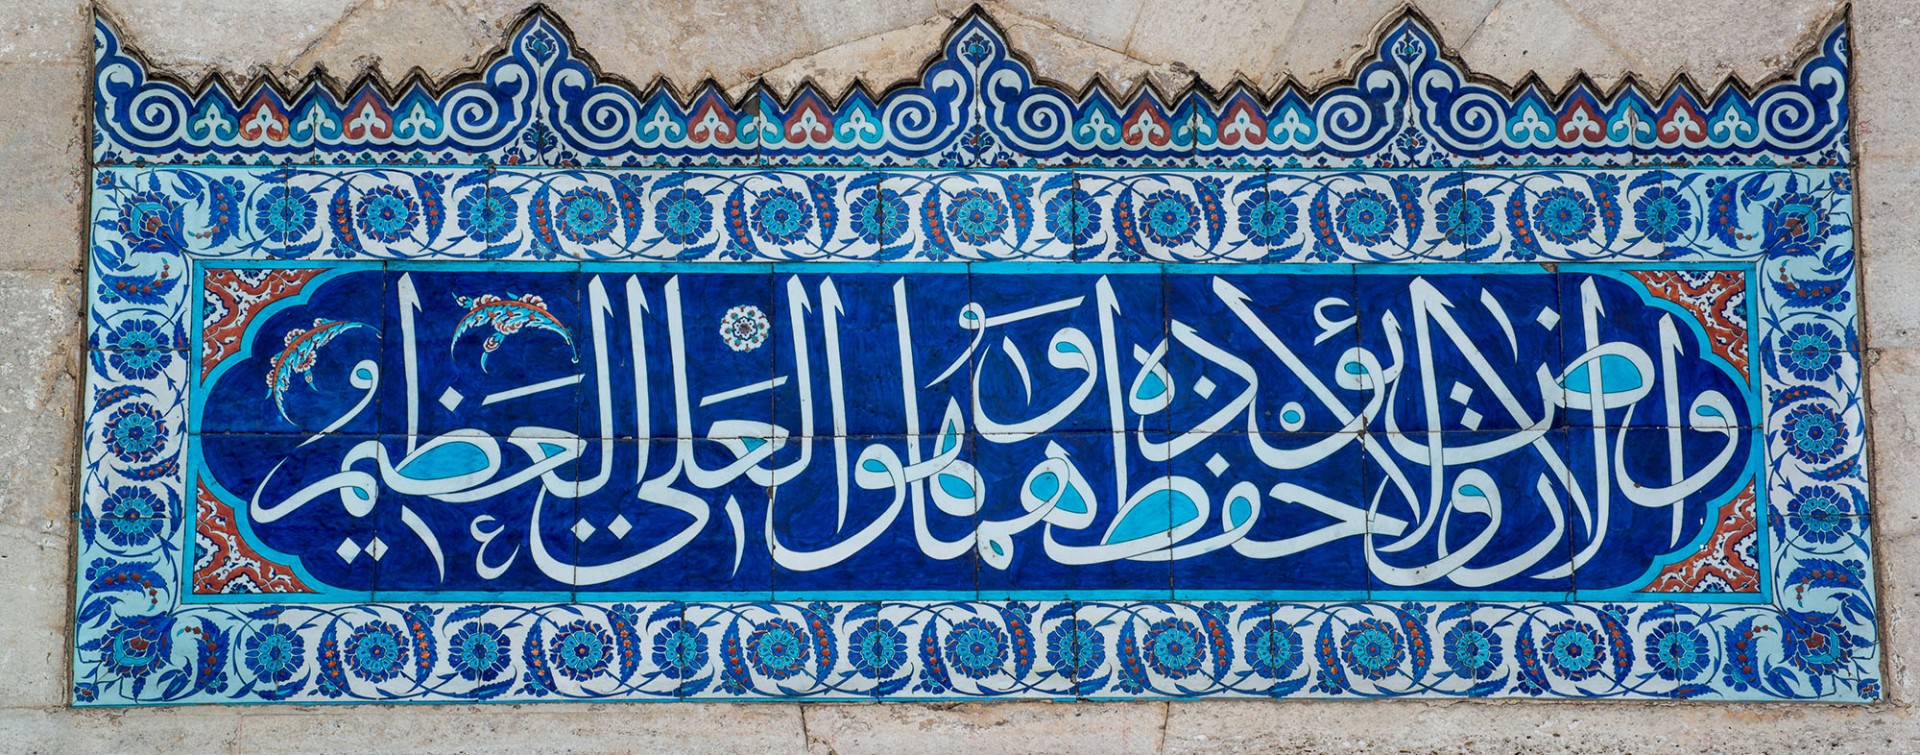 Tiles from Suleymaniye Camii